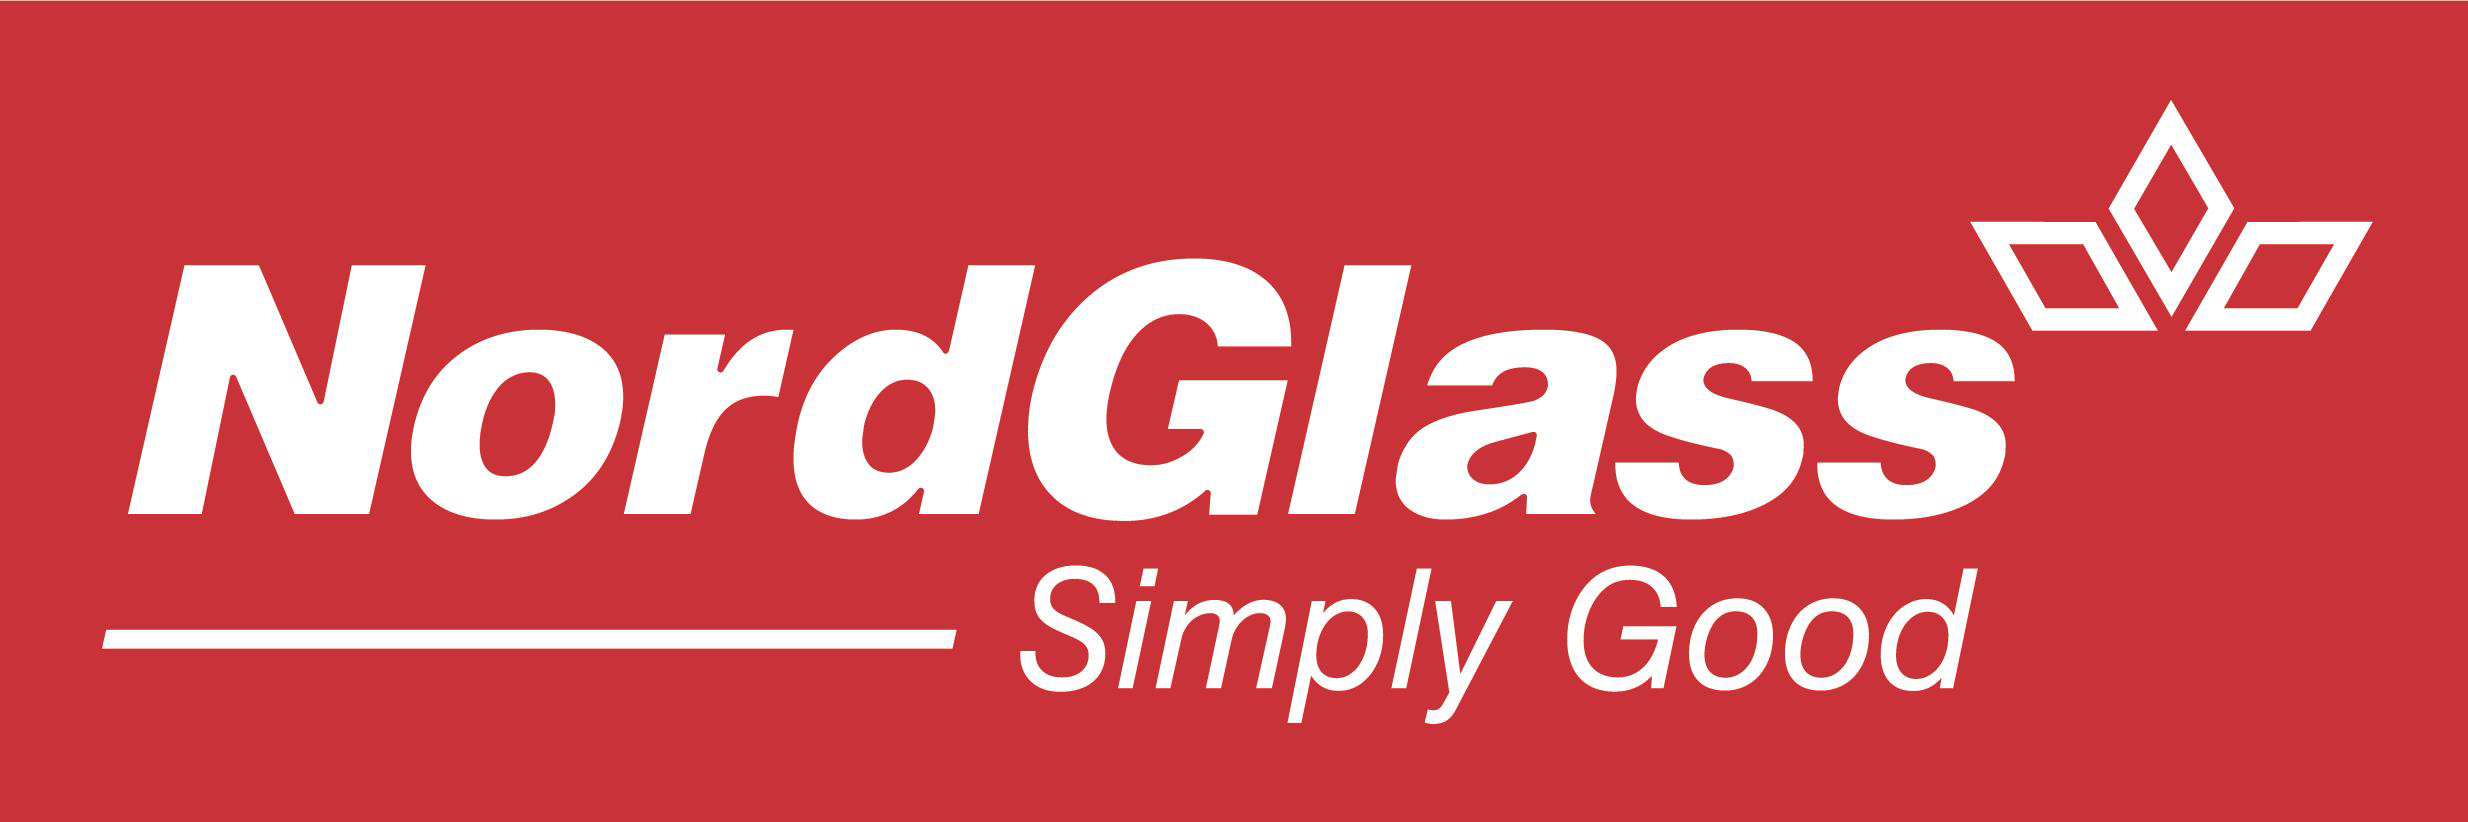 Производитель NORD GLASS логотип